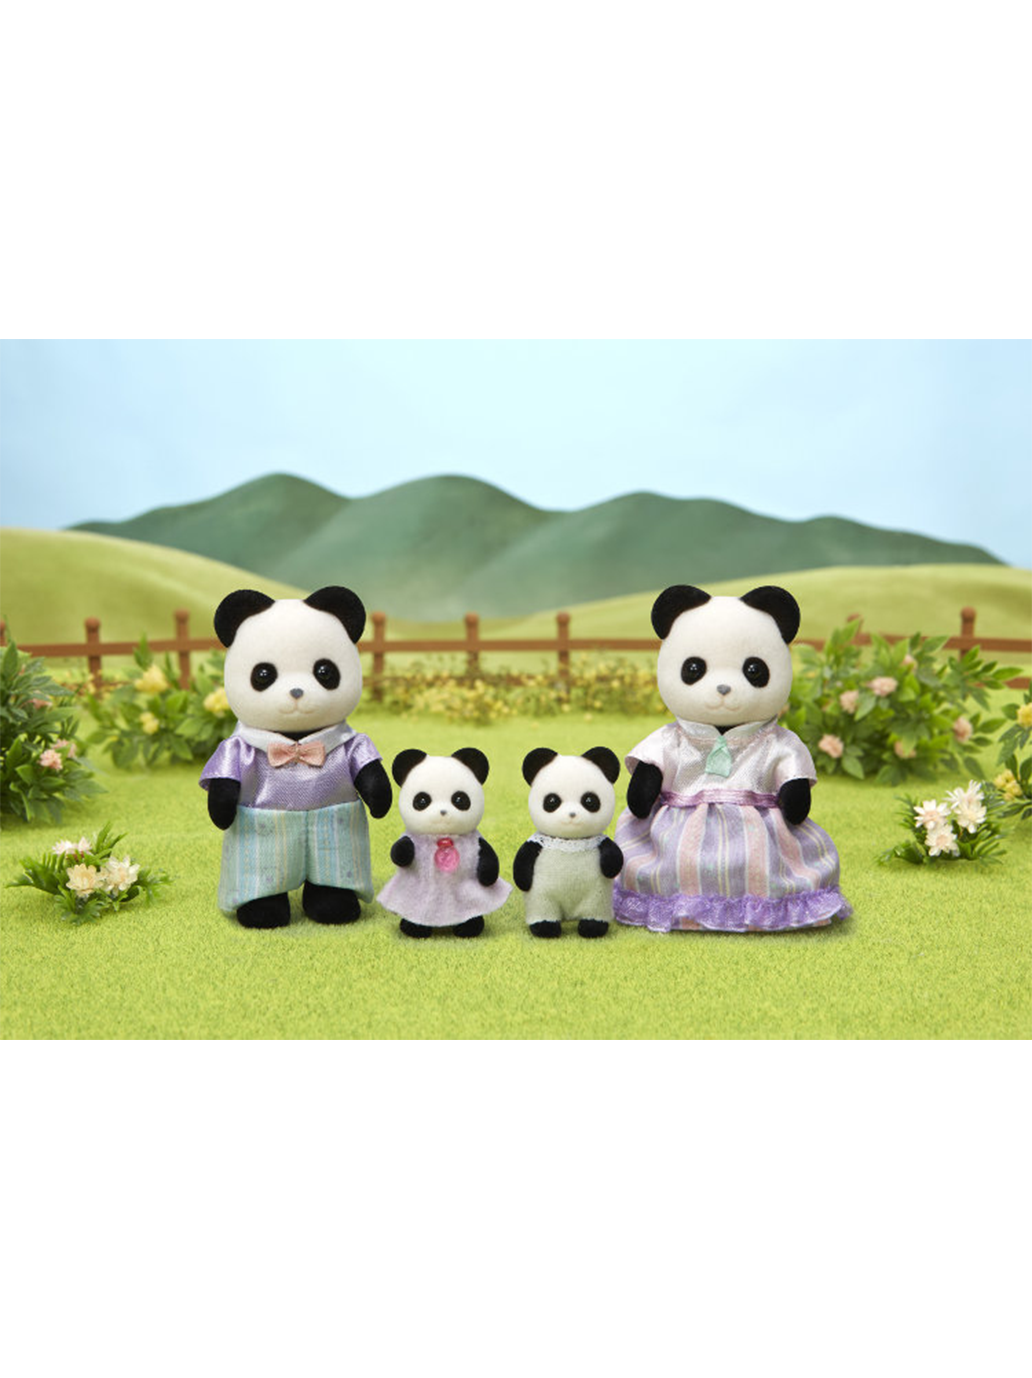 La famiglia dei panda